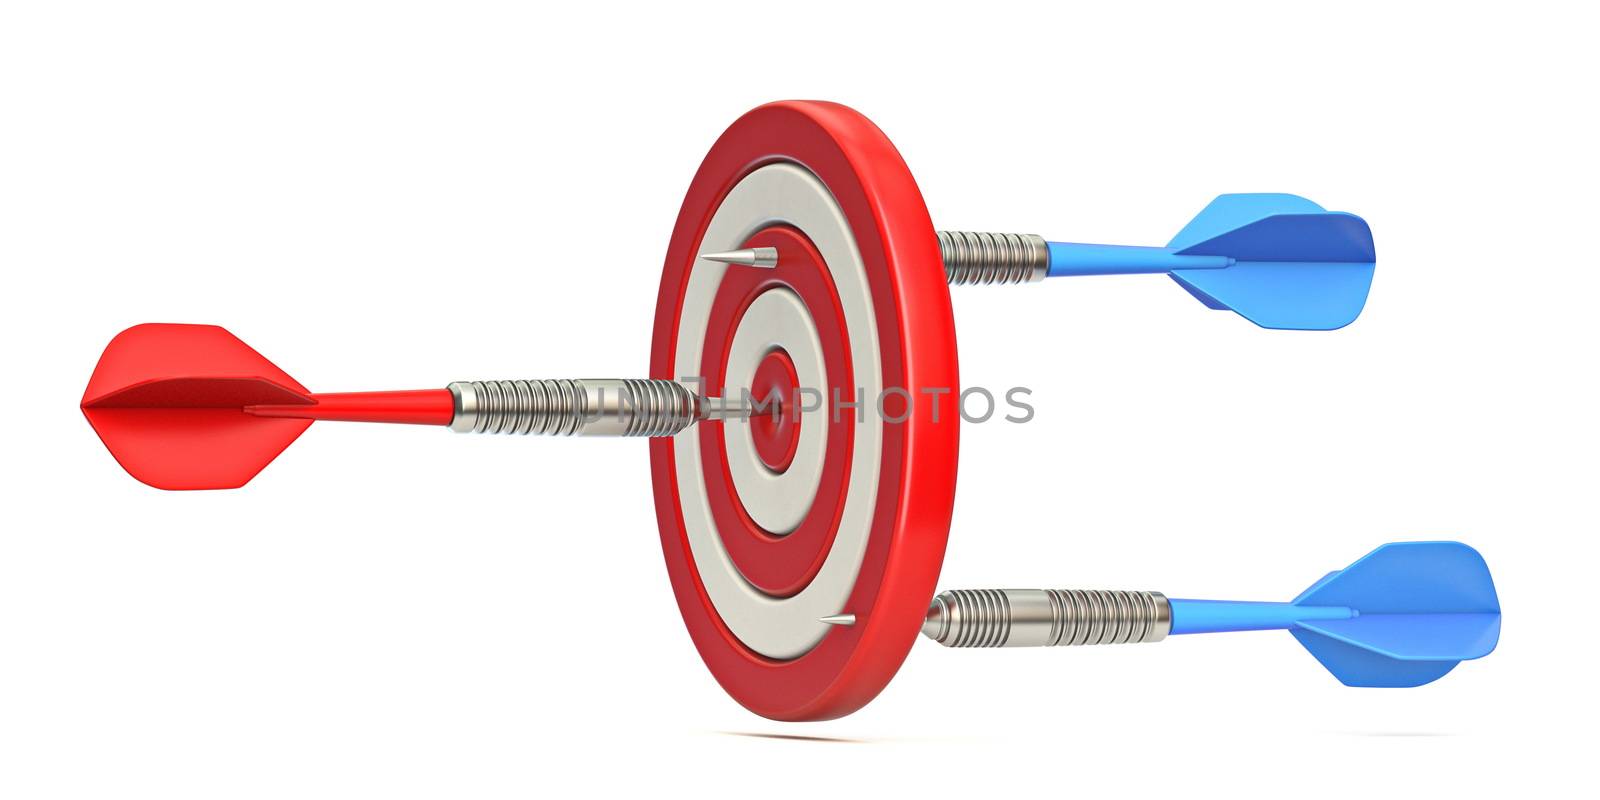 Dart hitting target from opposite sides 3D render illustration isolated on white background